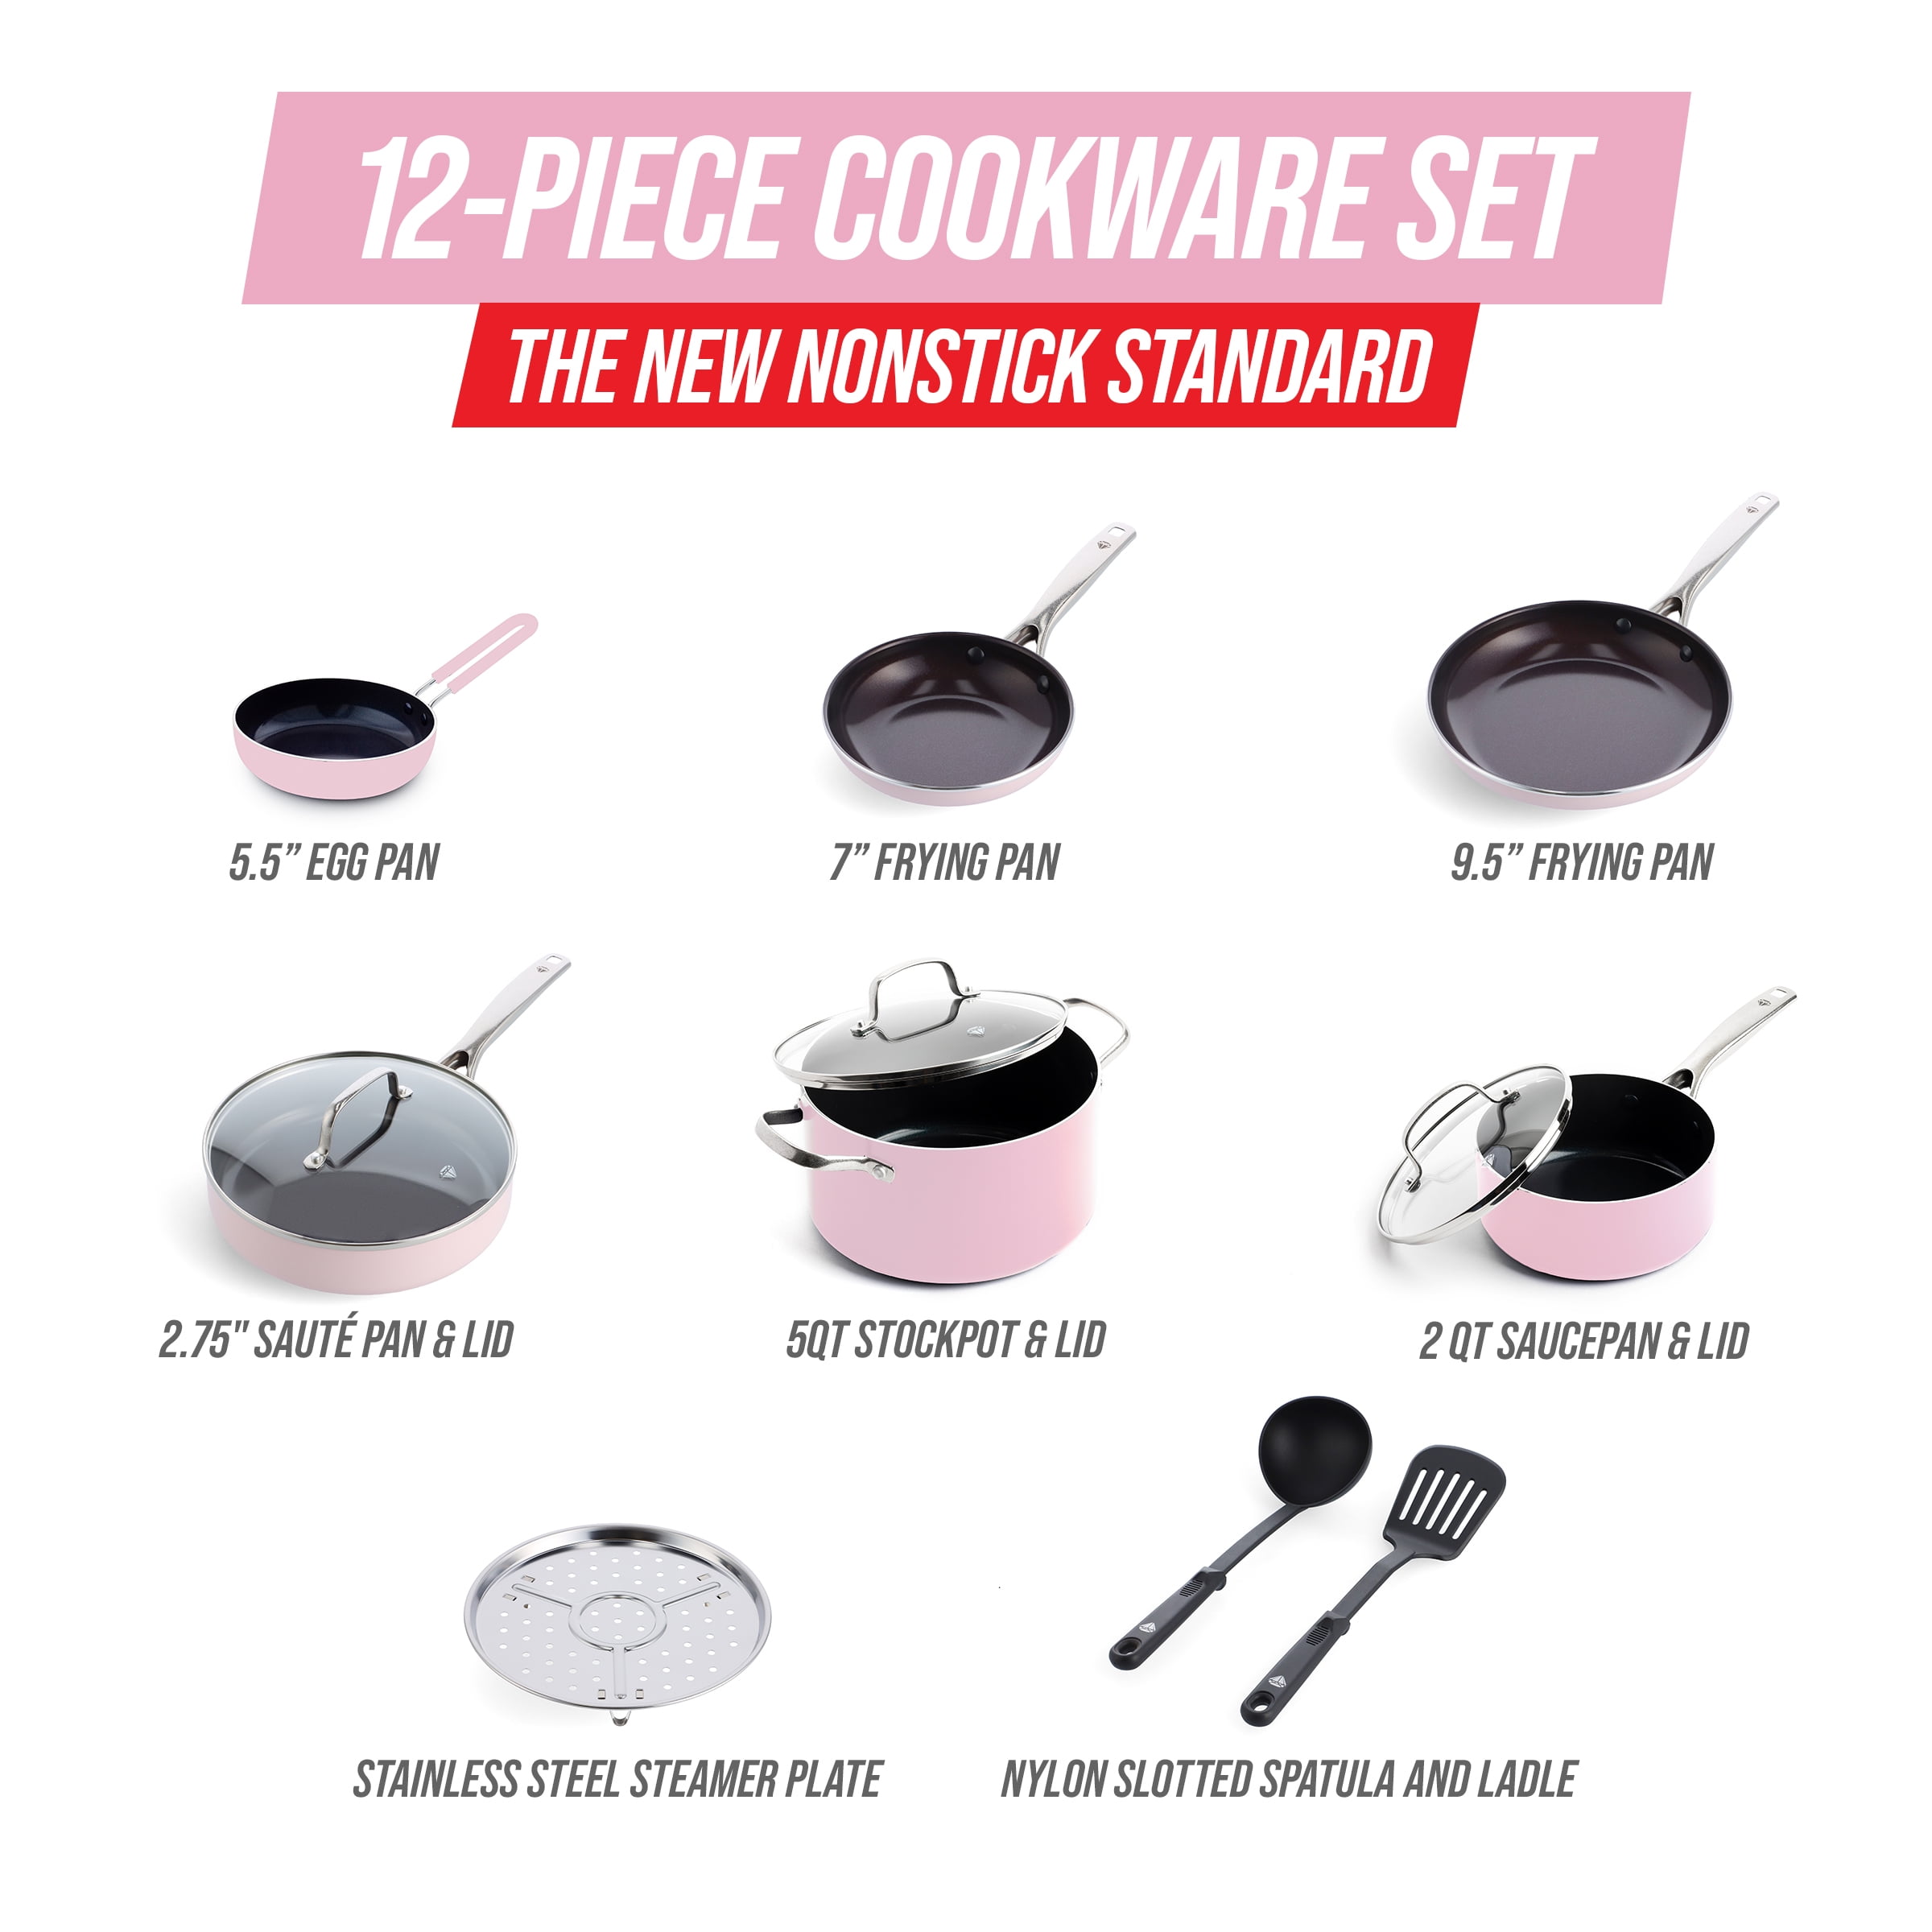 Tidlo Pink Cookware Set (9 Pieces)